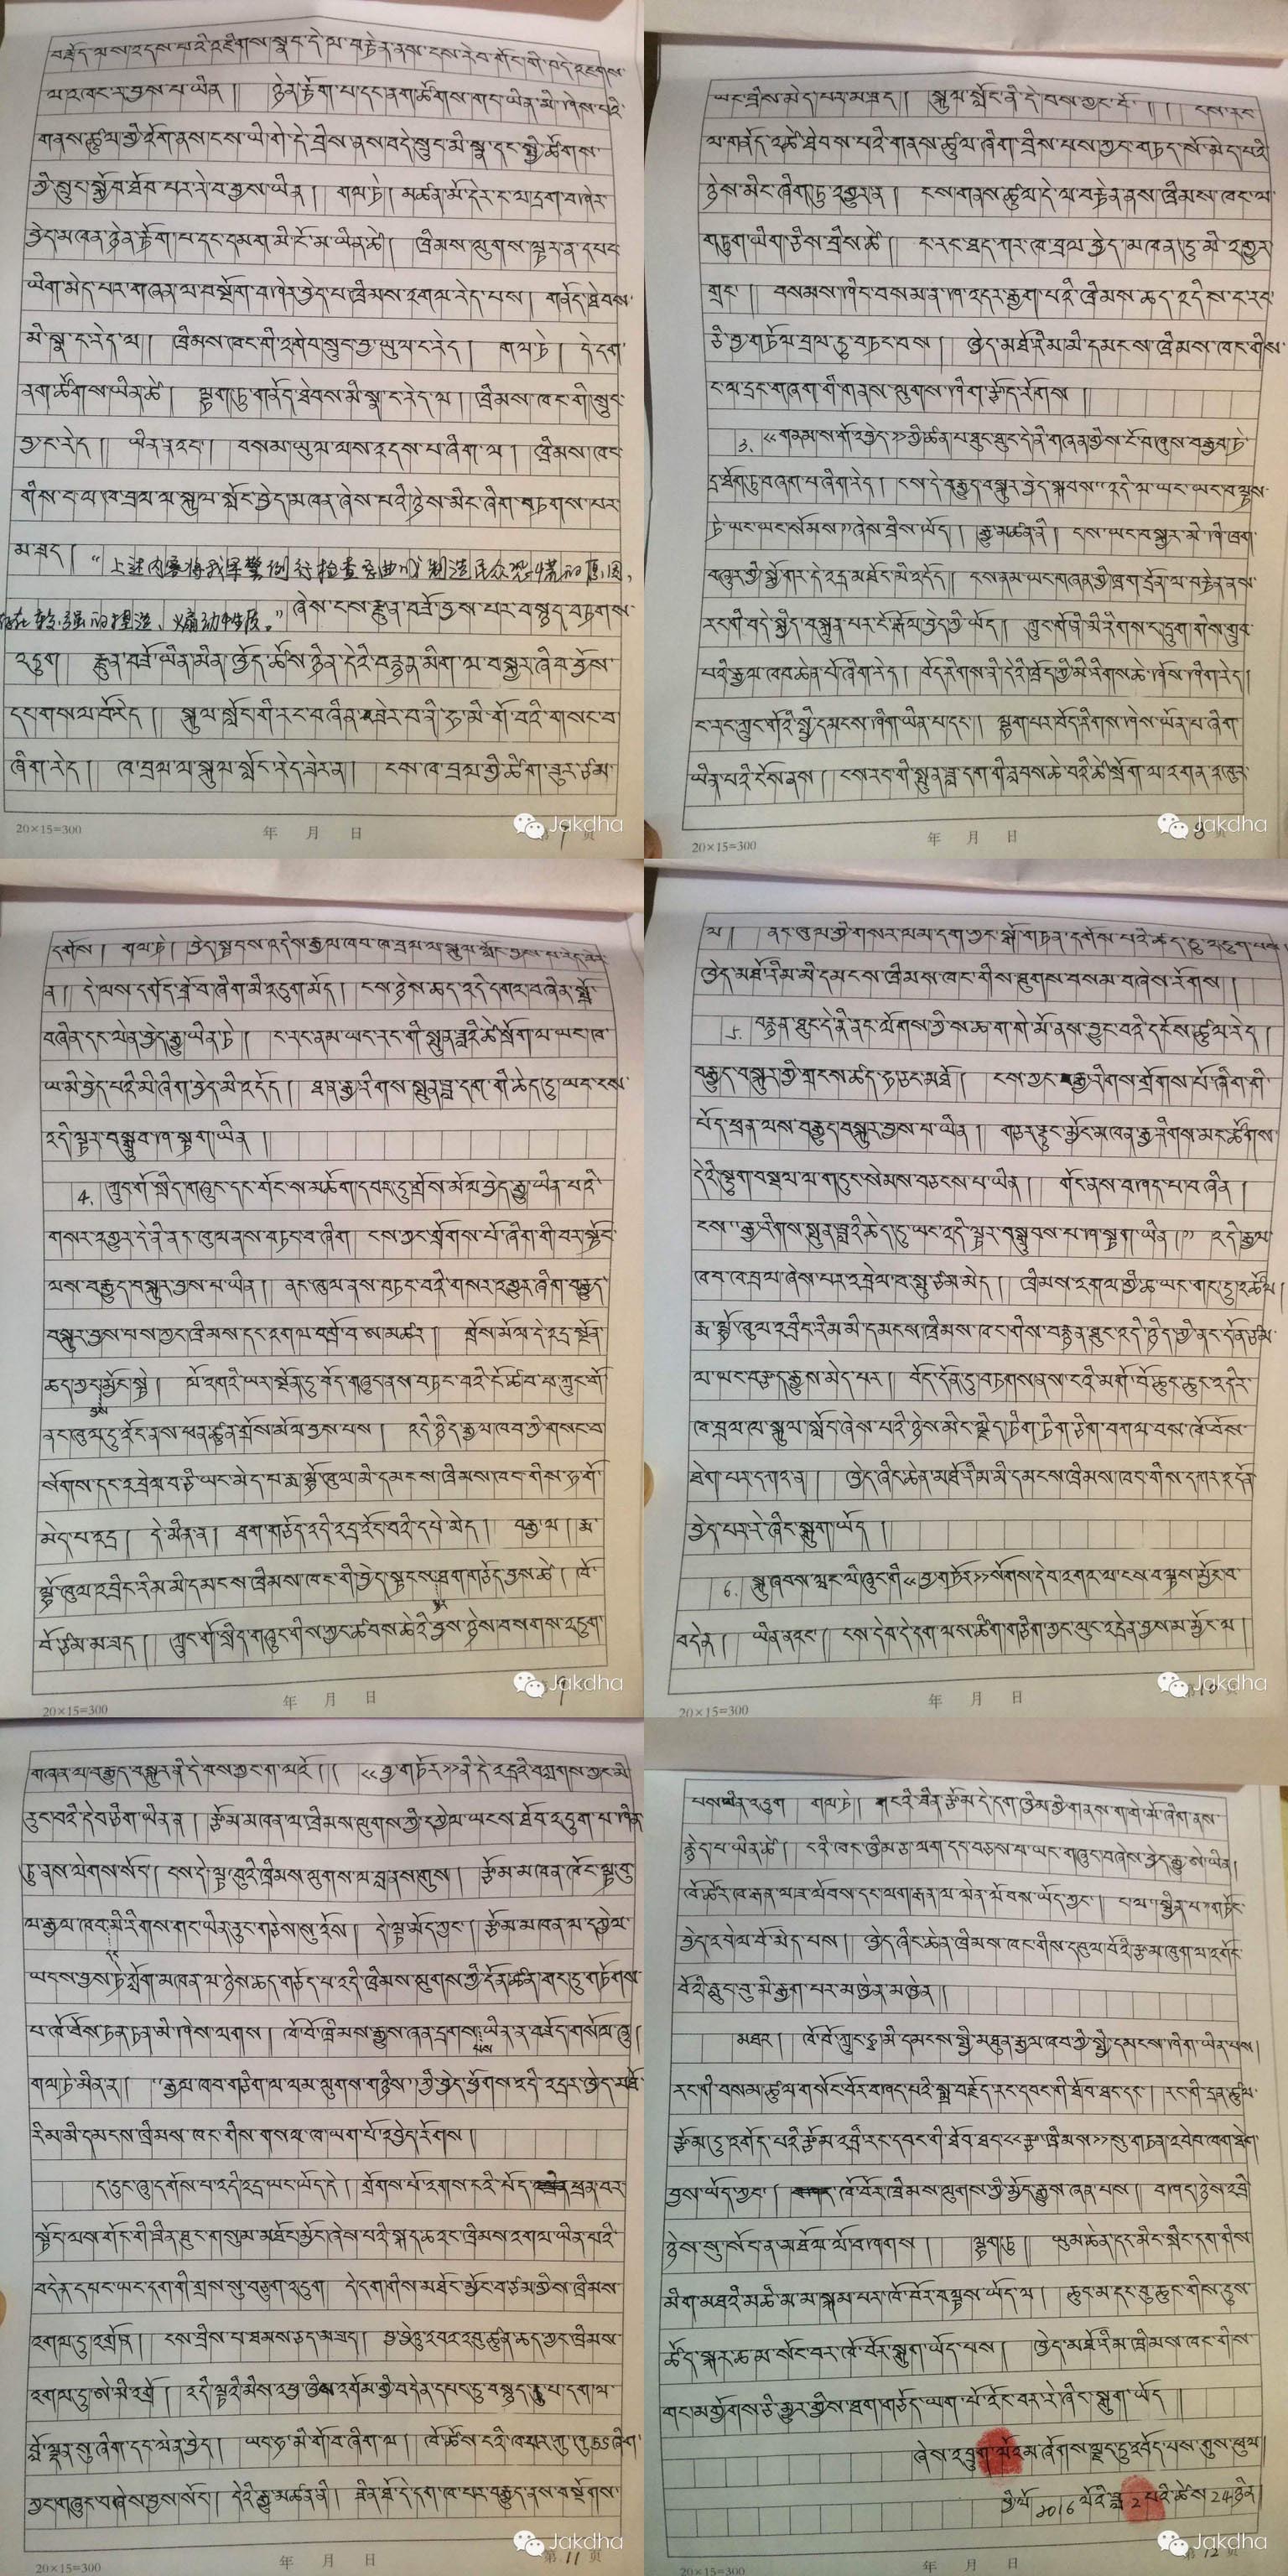 Second part of Shokjang's handwritten appeal letter in Tibetan